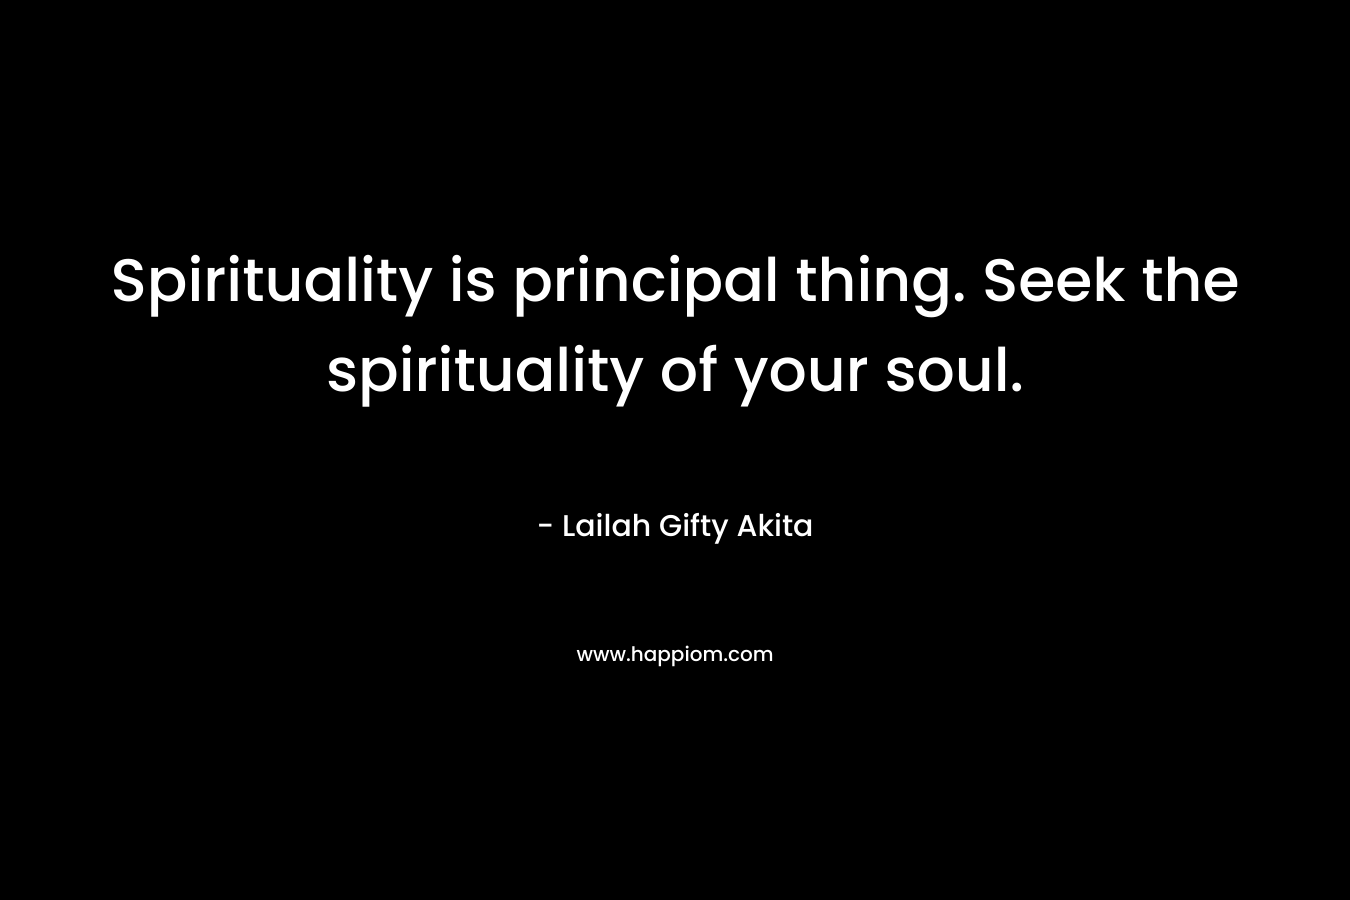 Spirituality is principal thing. Seek the spirituality of your soul.